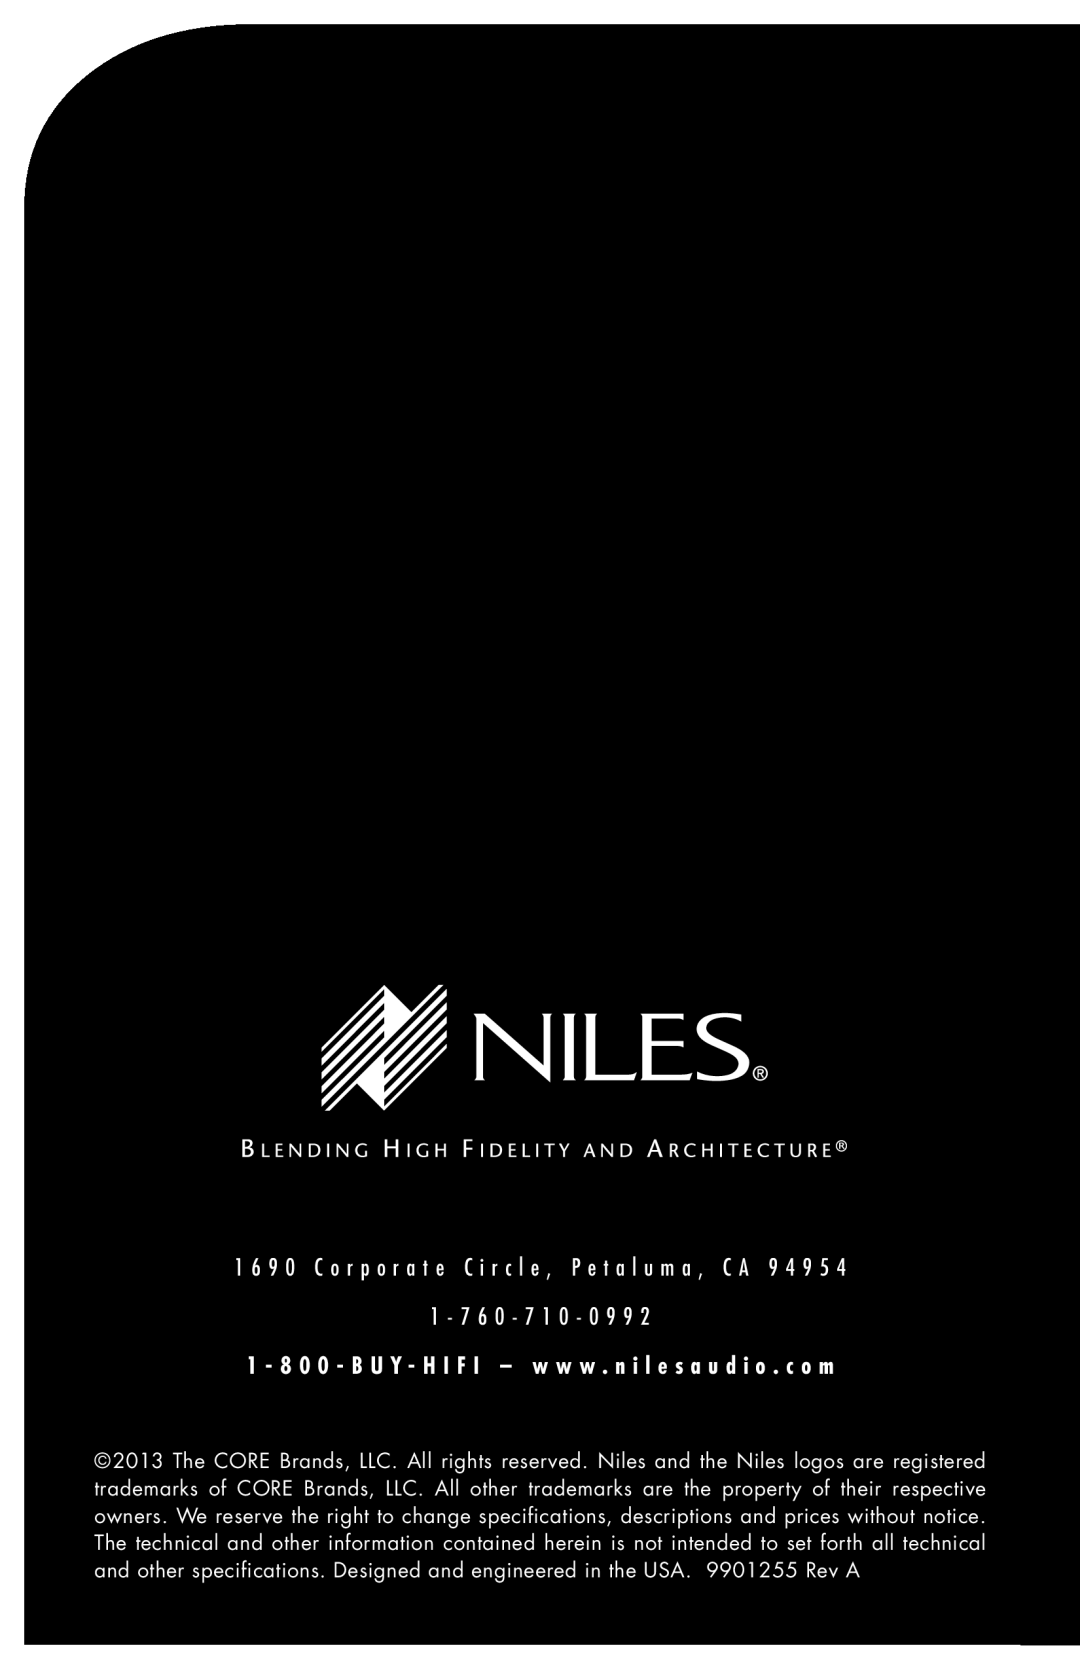 Niles Audio SI-1650 manual 1 - 7 6 0 - 7 1 0 - 0 9 9 